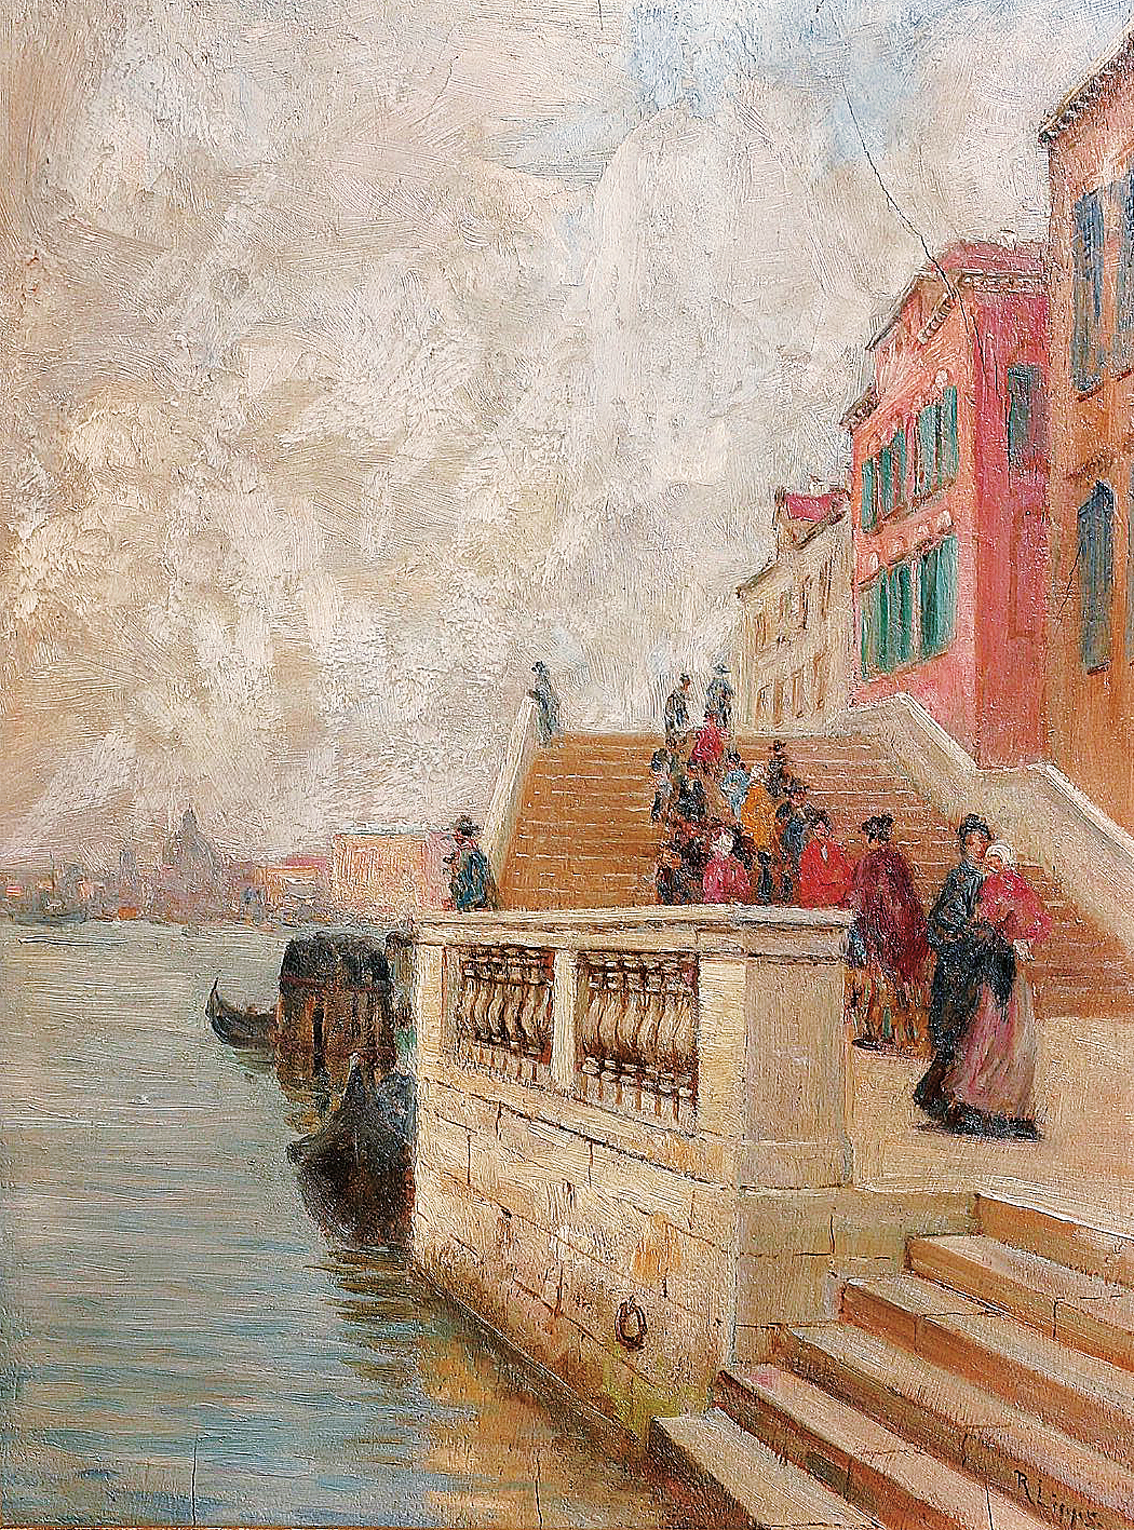 "Venice: various people on Riva degli Schiavoni"